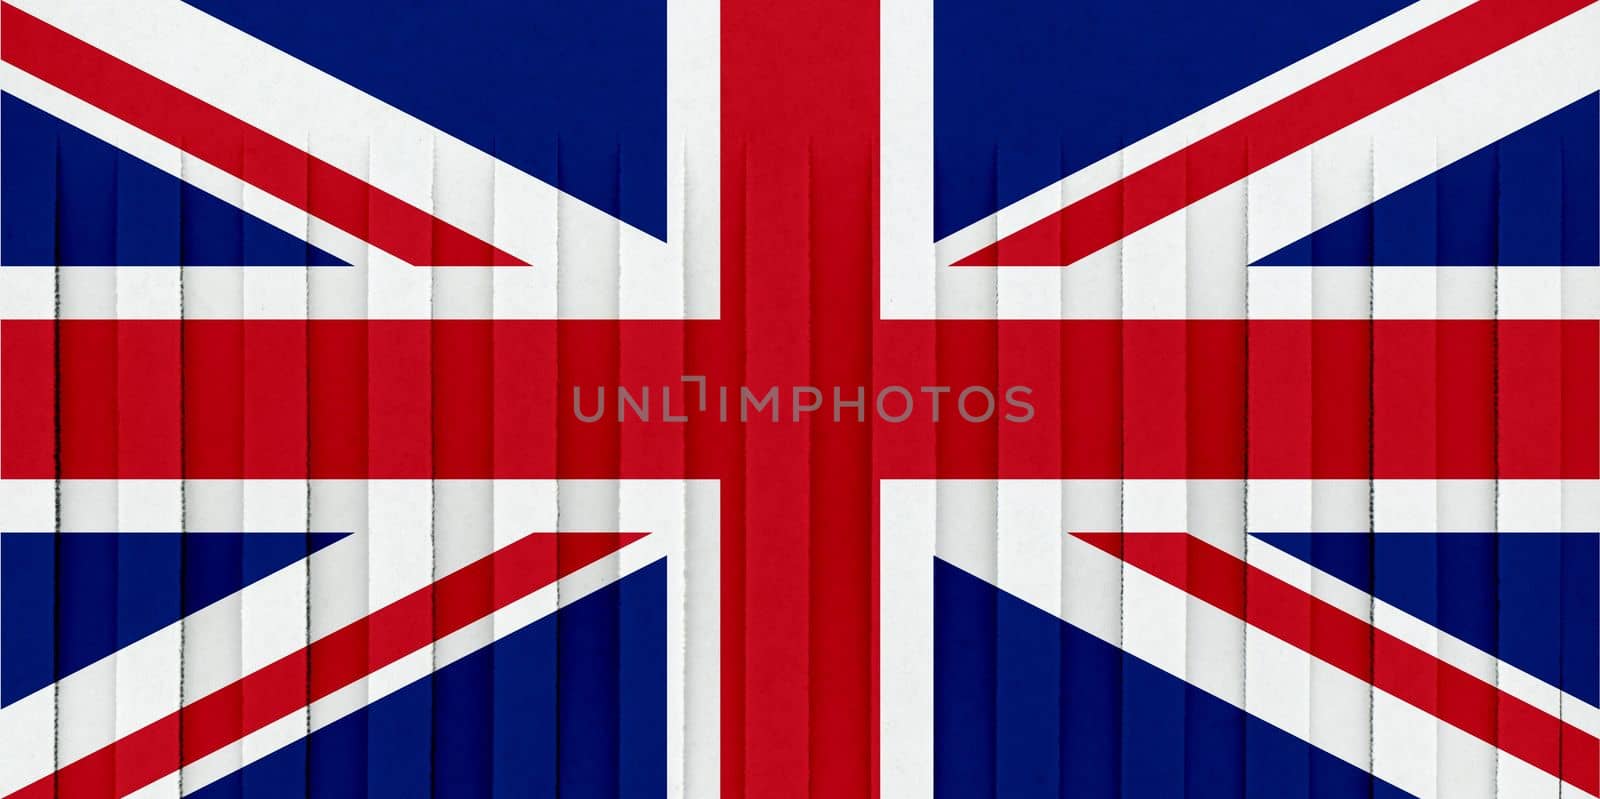 shredded flag of the United Kingdom by claudiodivizia